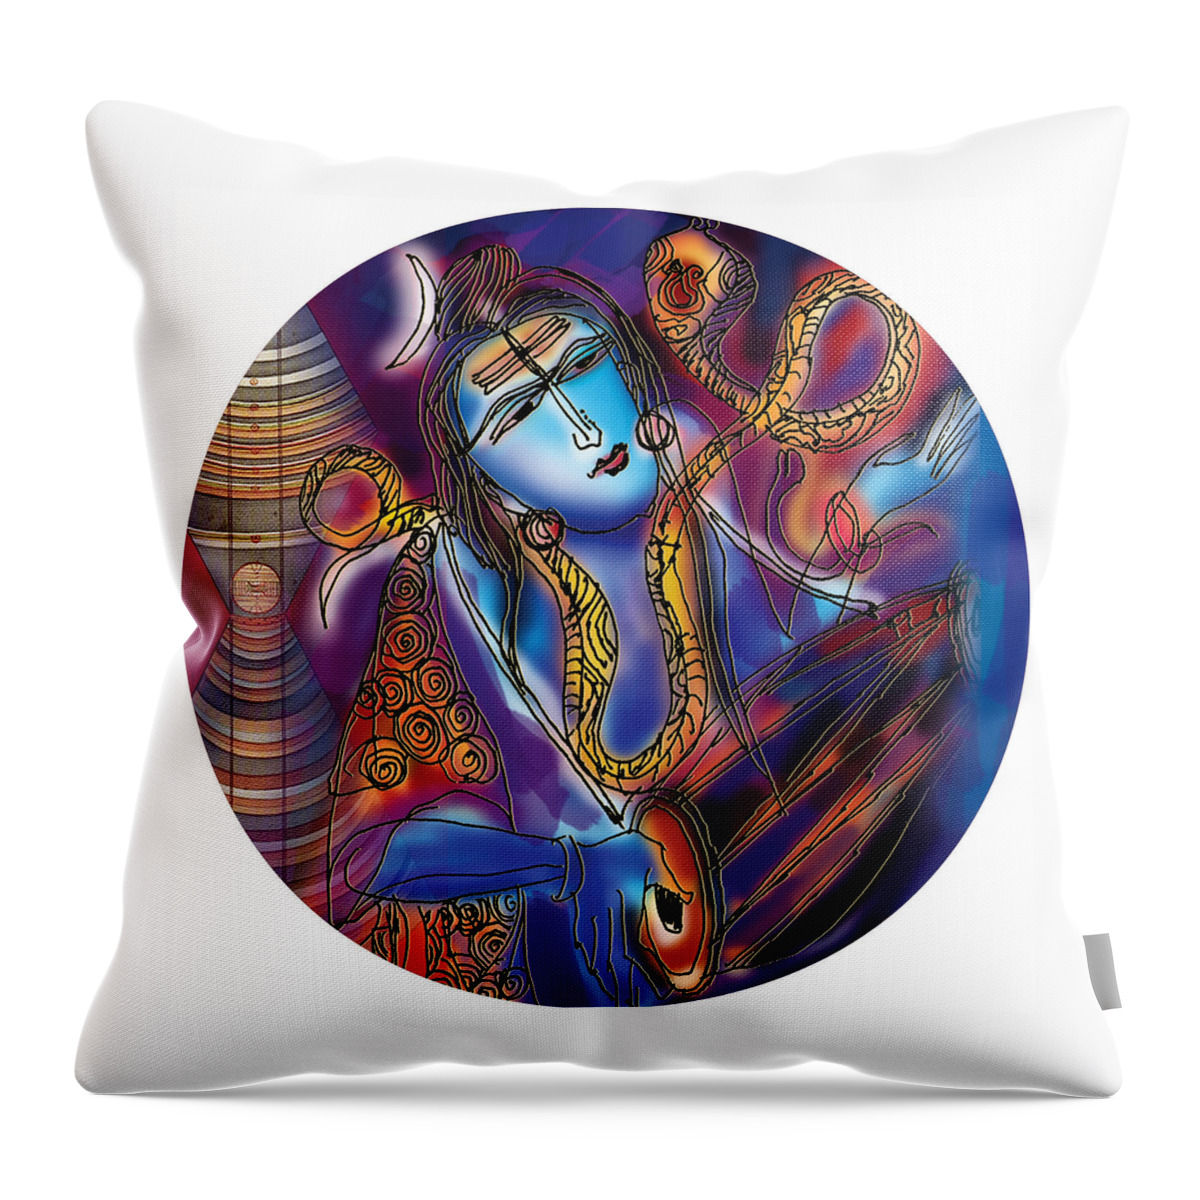 Yoga Throw Pillow featuring the painting Shiva playing the drums by Guruji Aruneshvar Paris Art Curator Katrin Suter